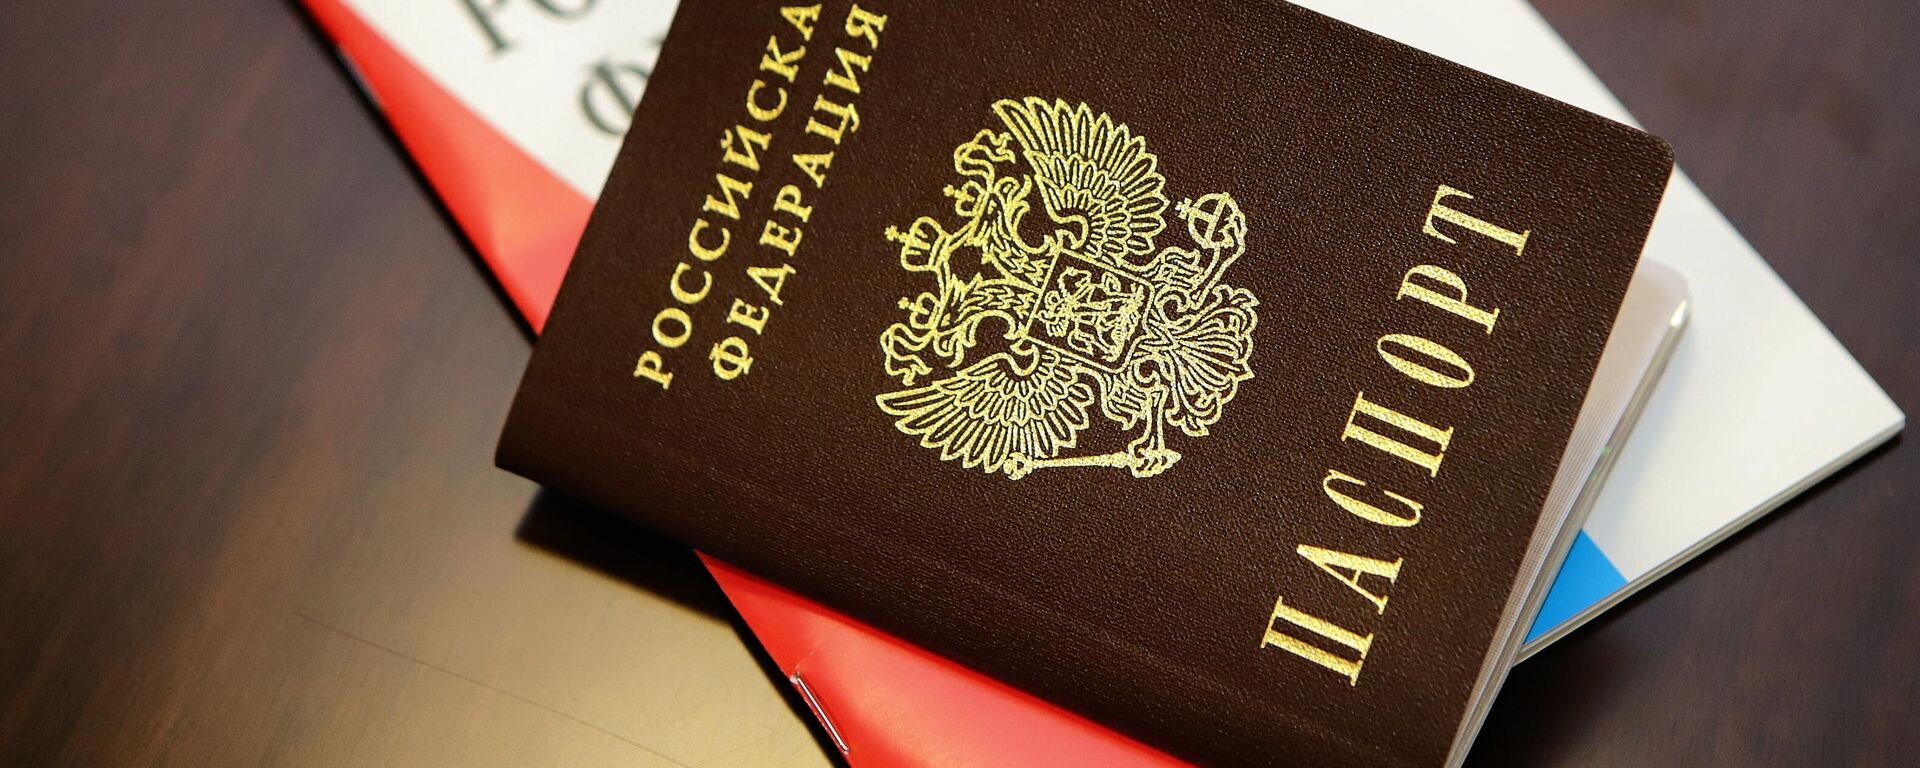 Un pasaporte ruso  - Sputnik Mundo, 1920, 26.07.2022